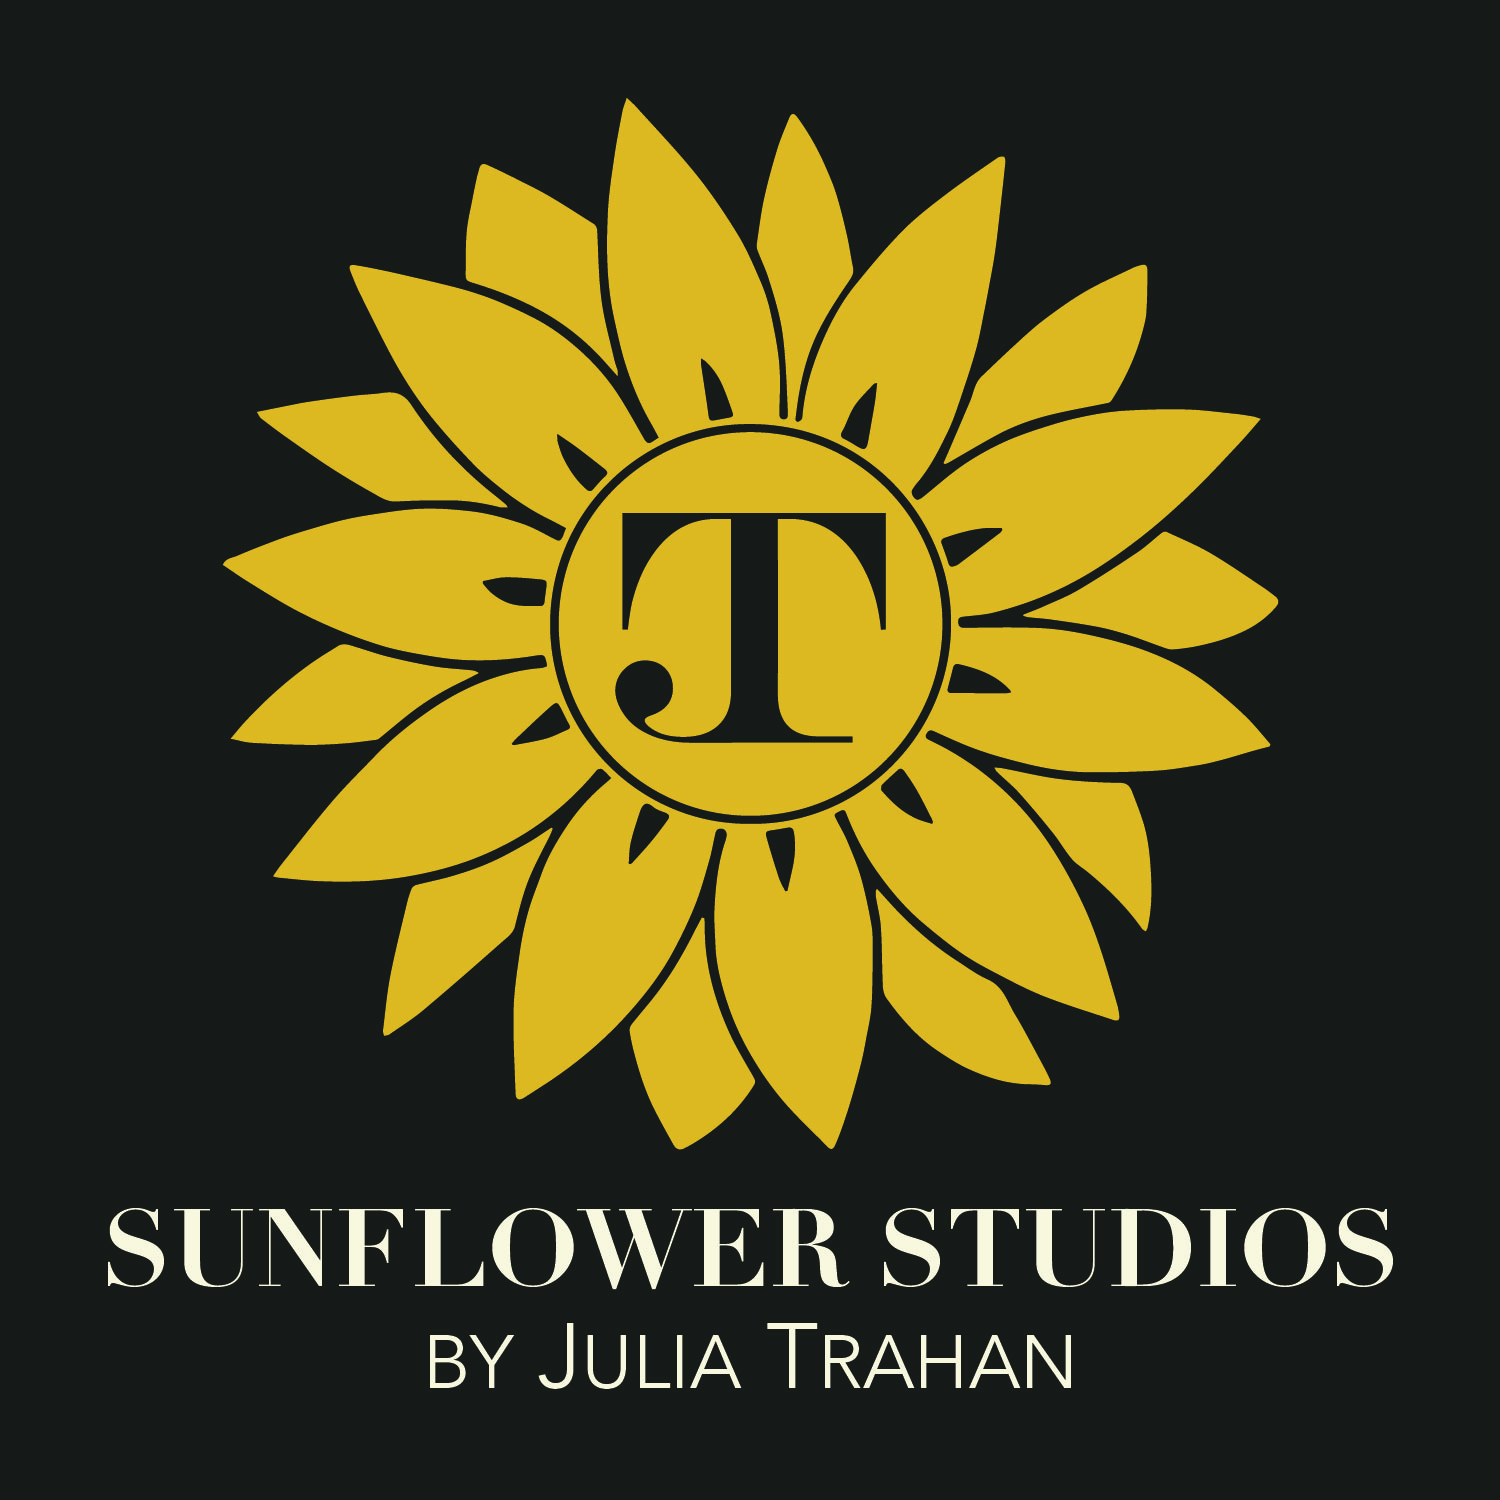  / Sunflower Studios by Julia Trahan